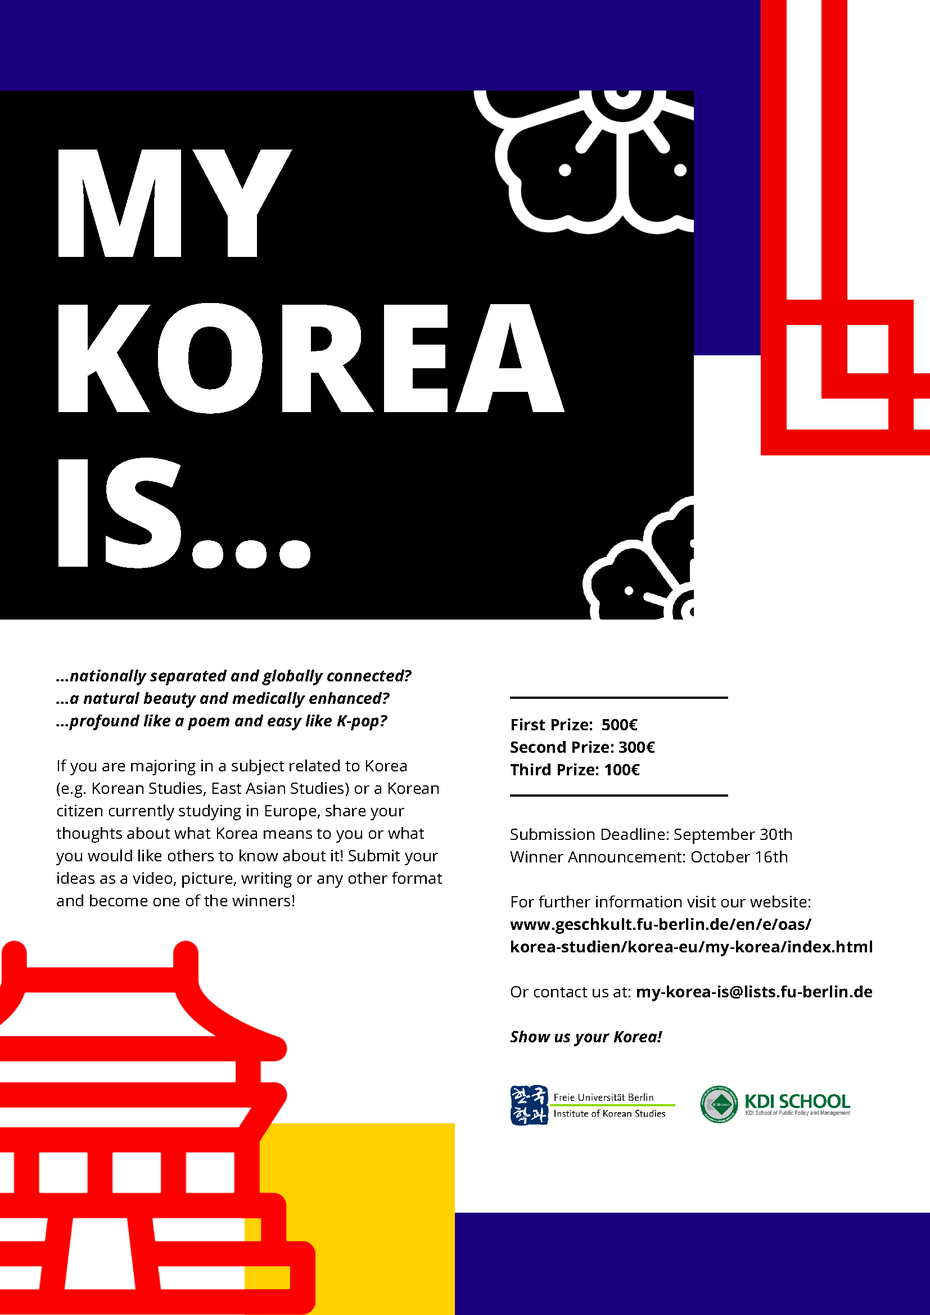 My Korea is